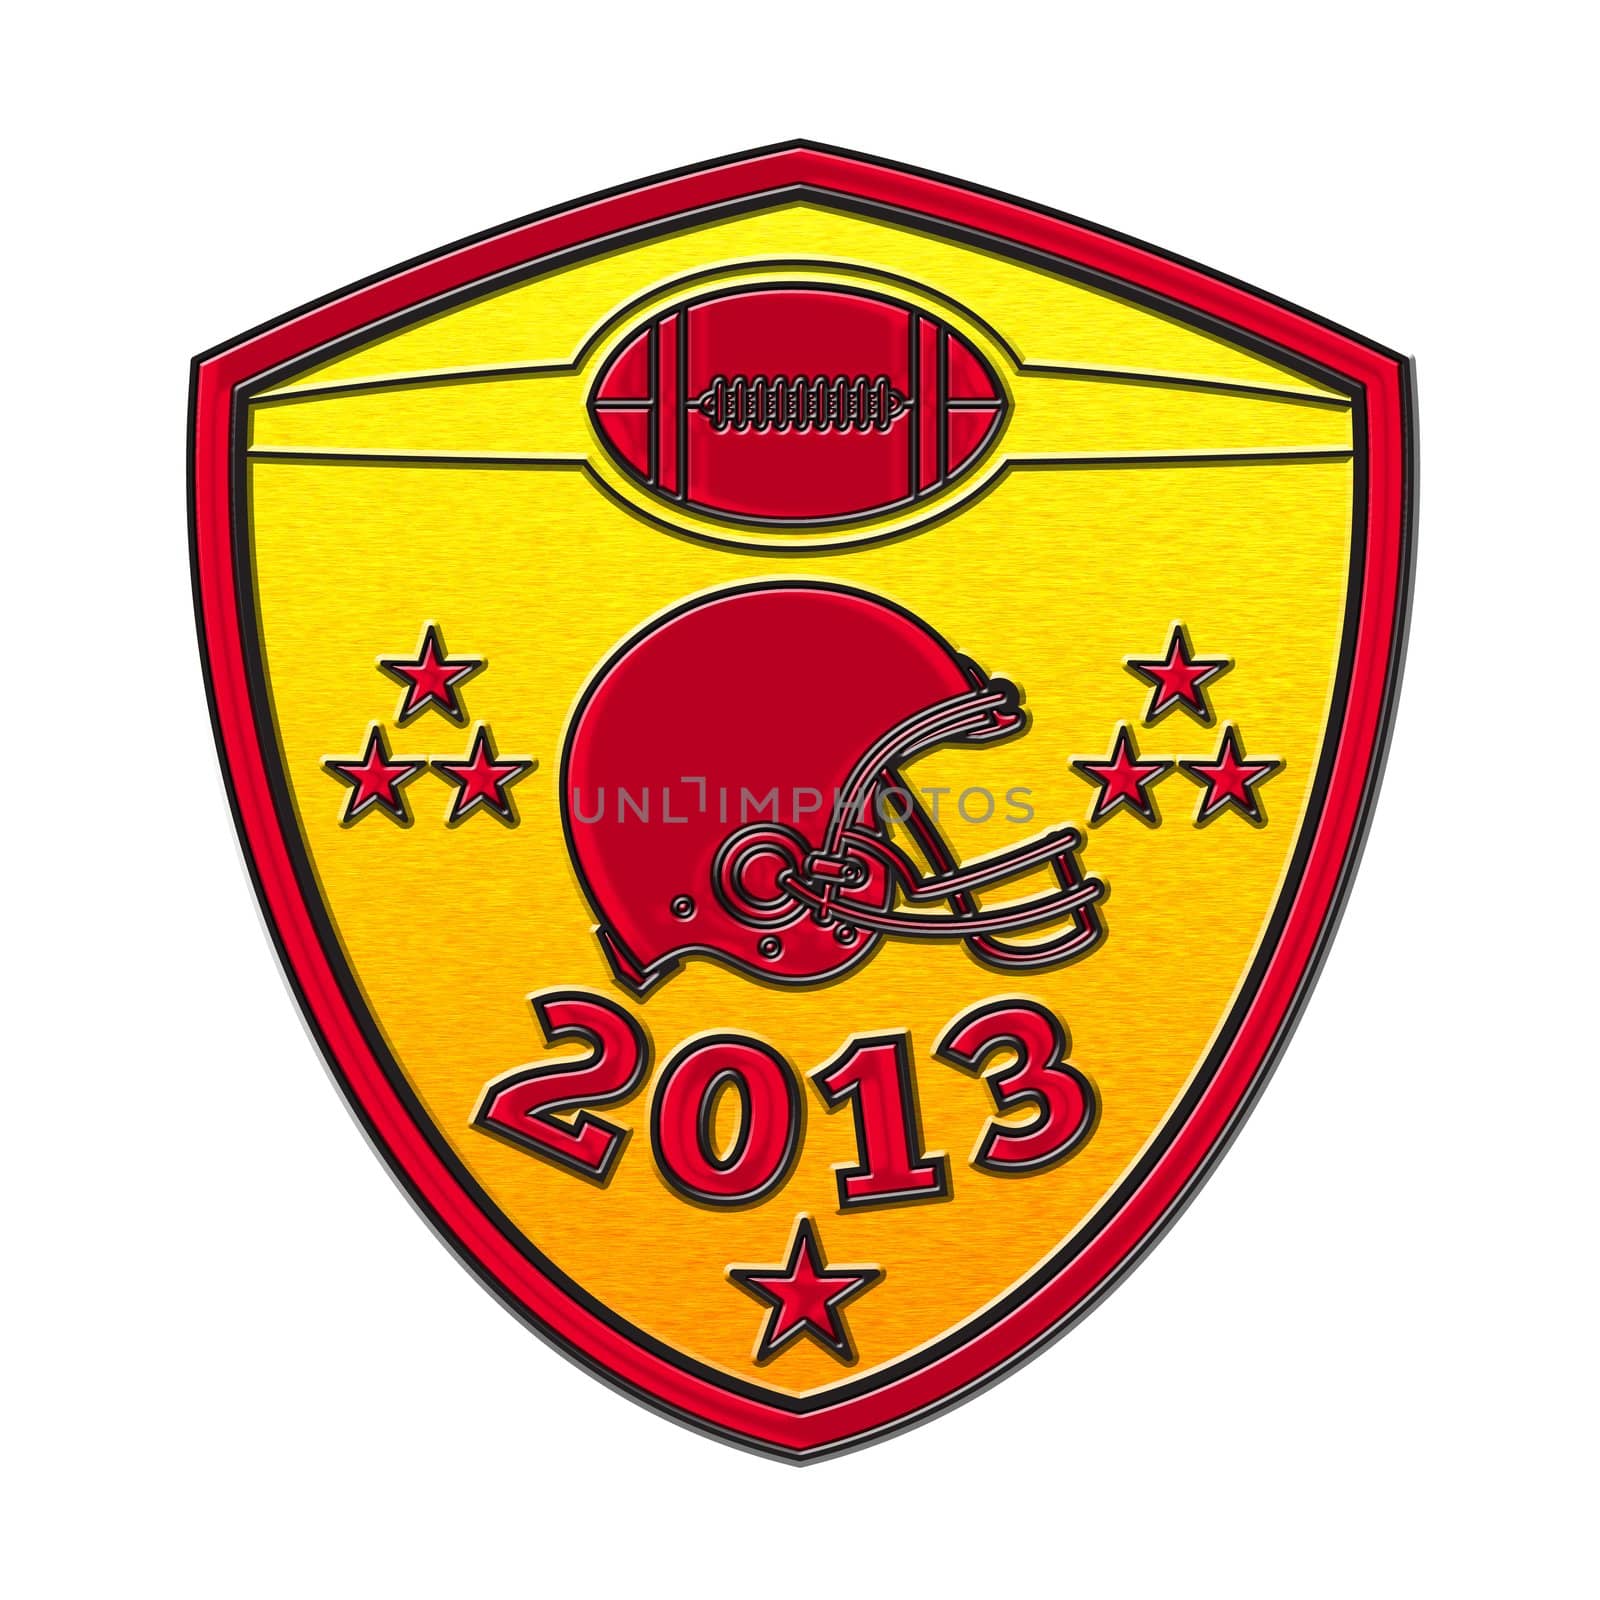 american football champions 2013 shield by patrimonio